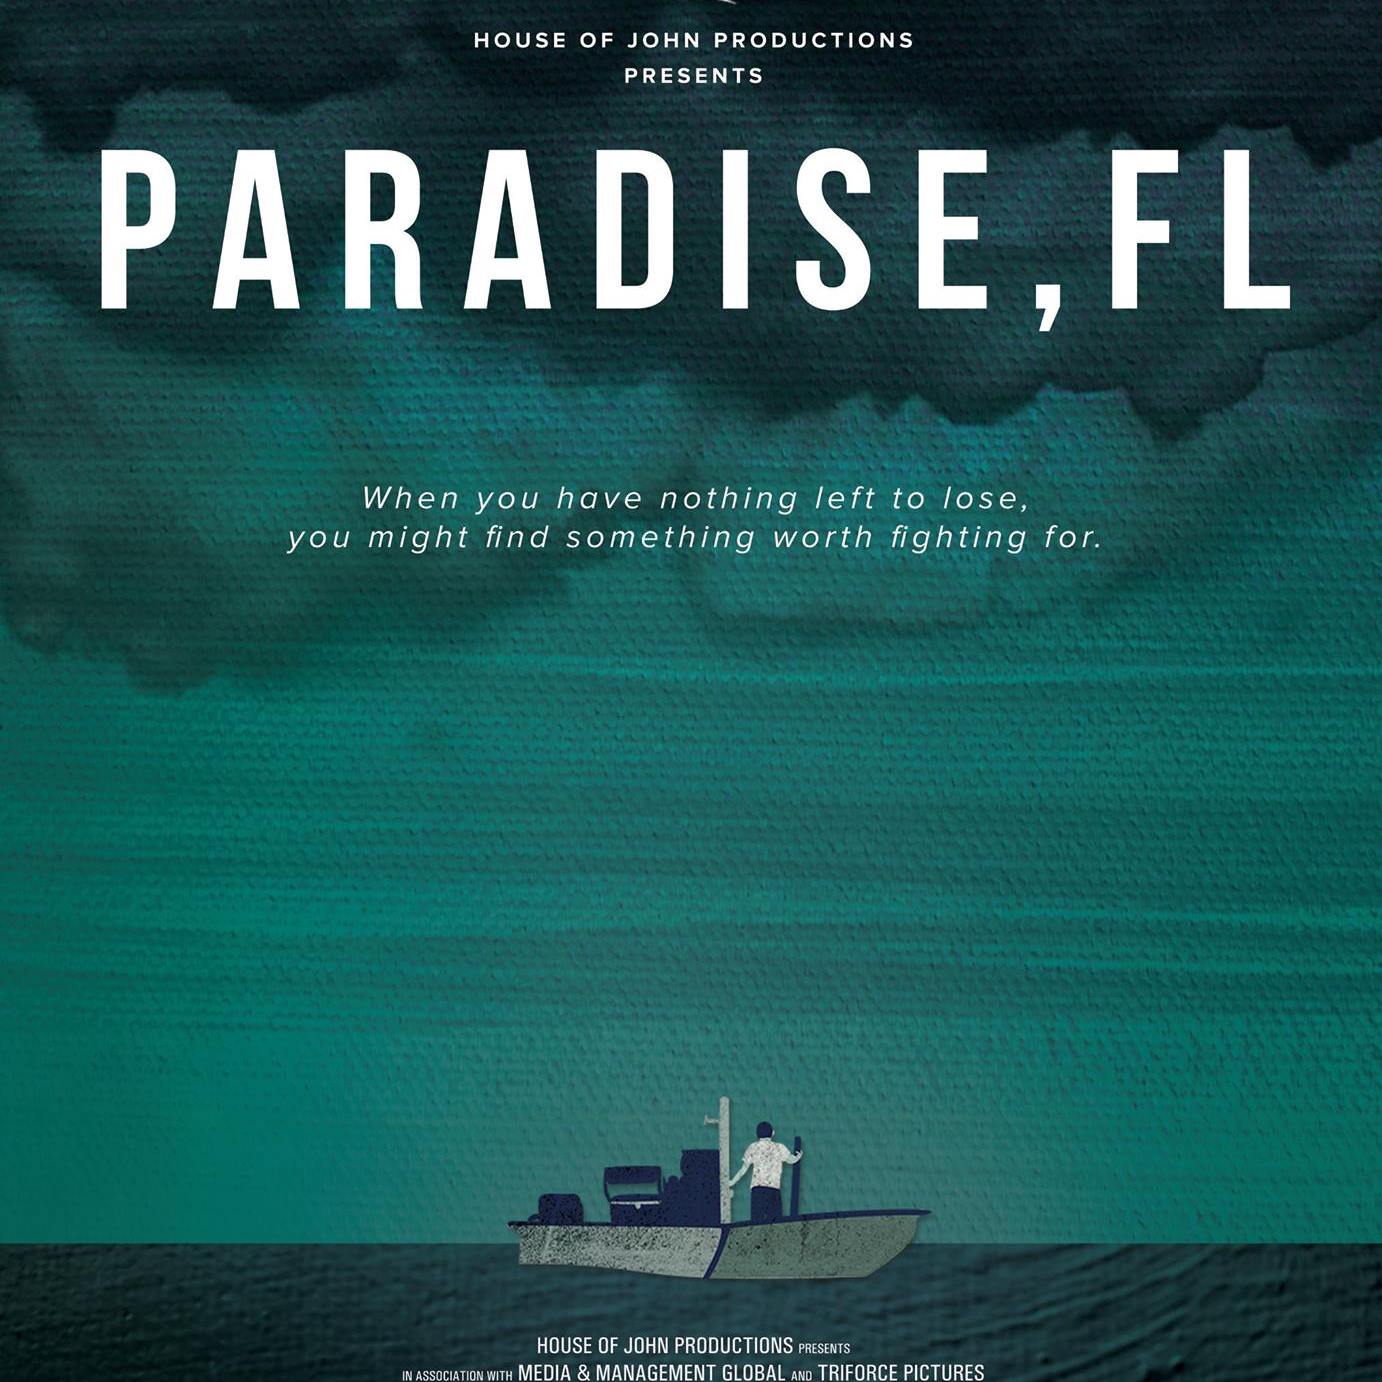 'Paradise, FL' Show Card